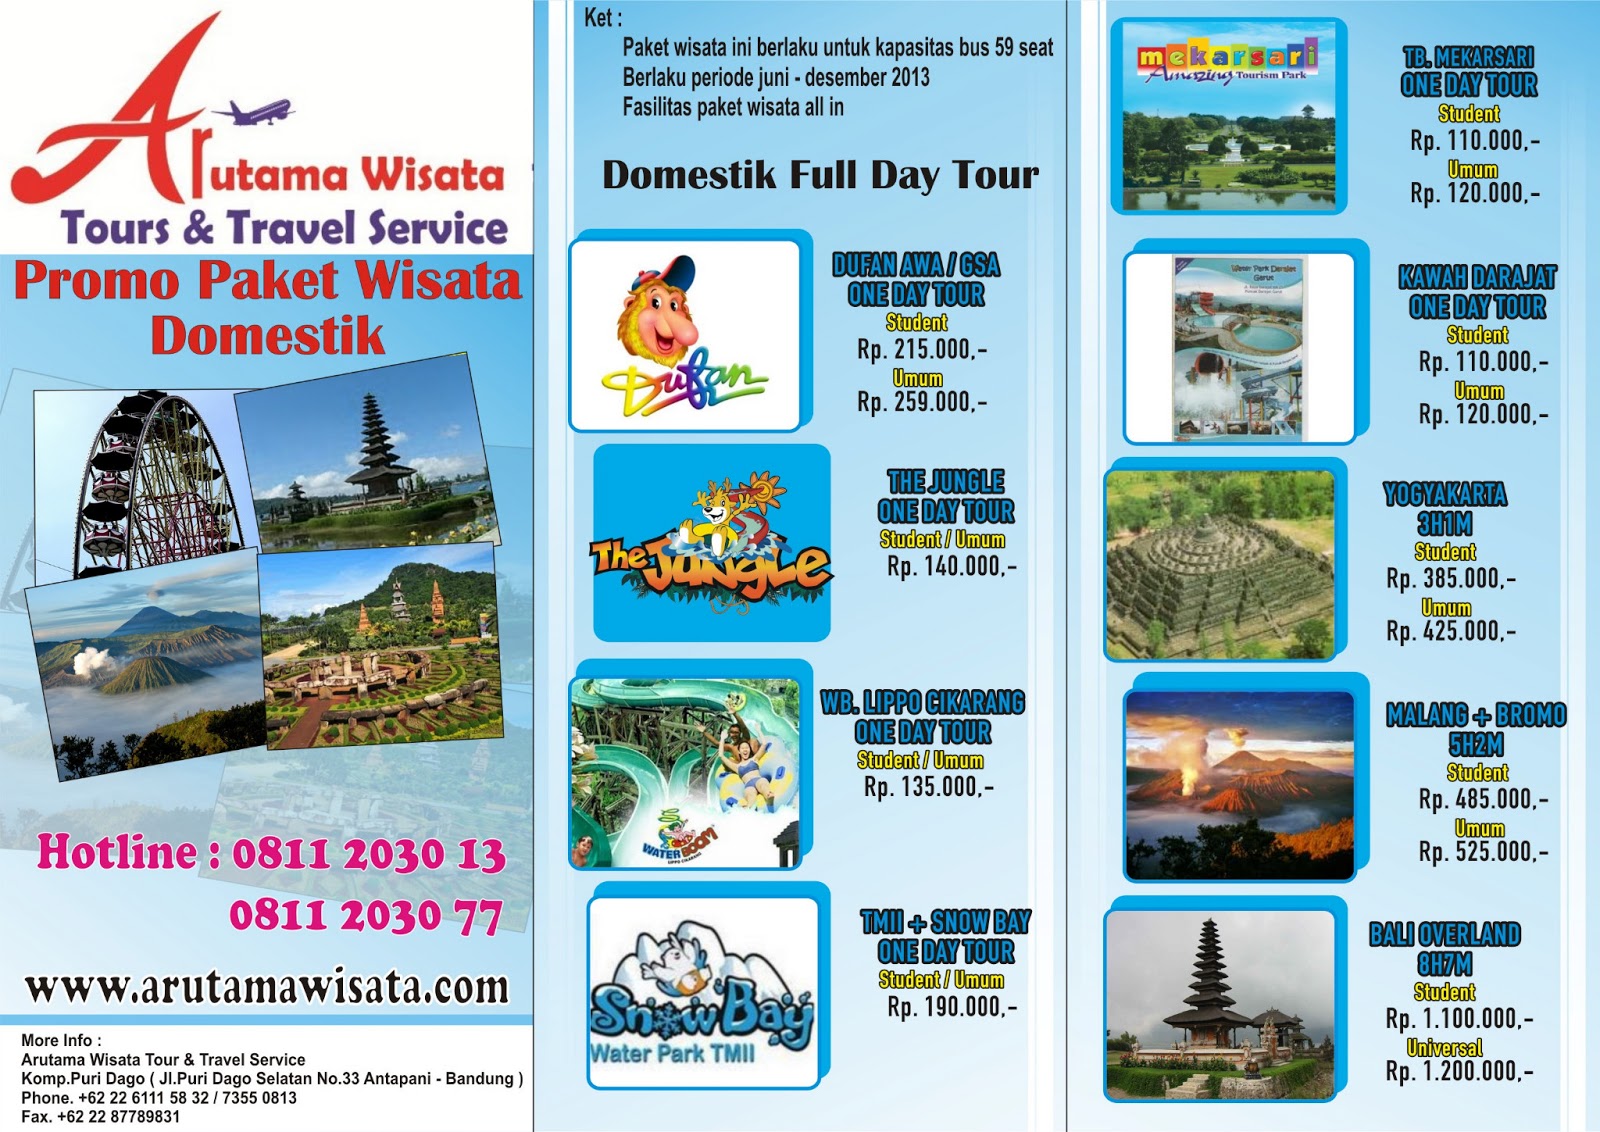 Arutama Wisata Tour Travel Service Promo Paket Wisata 